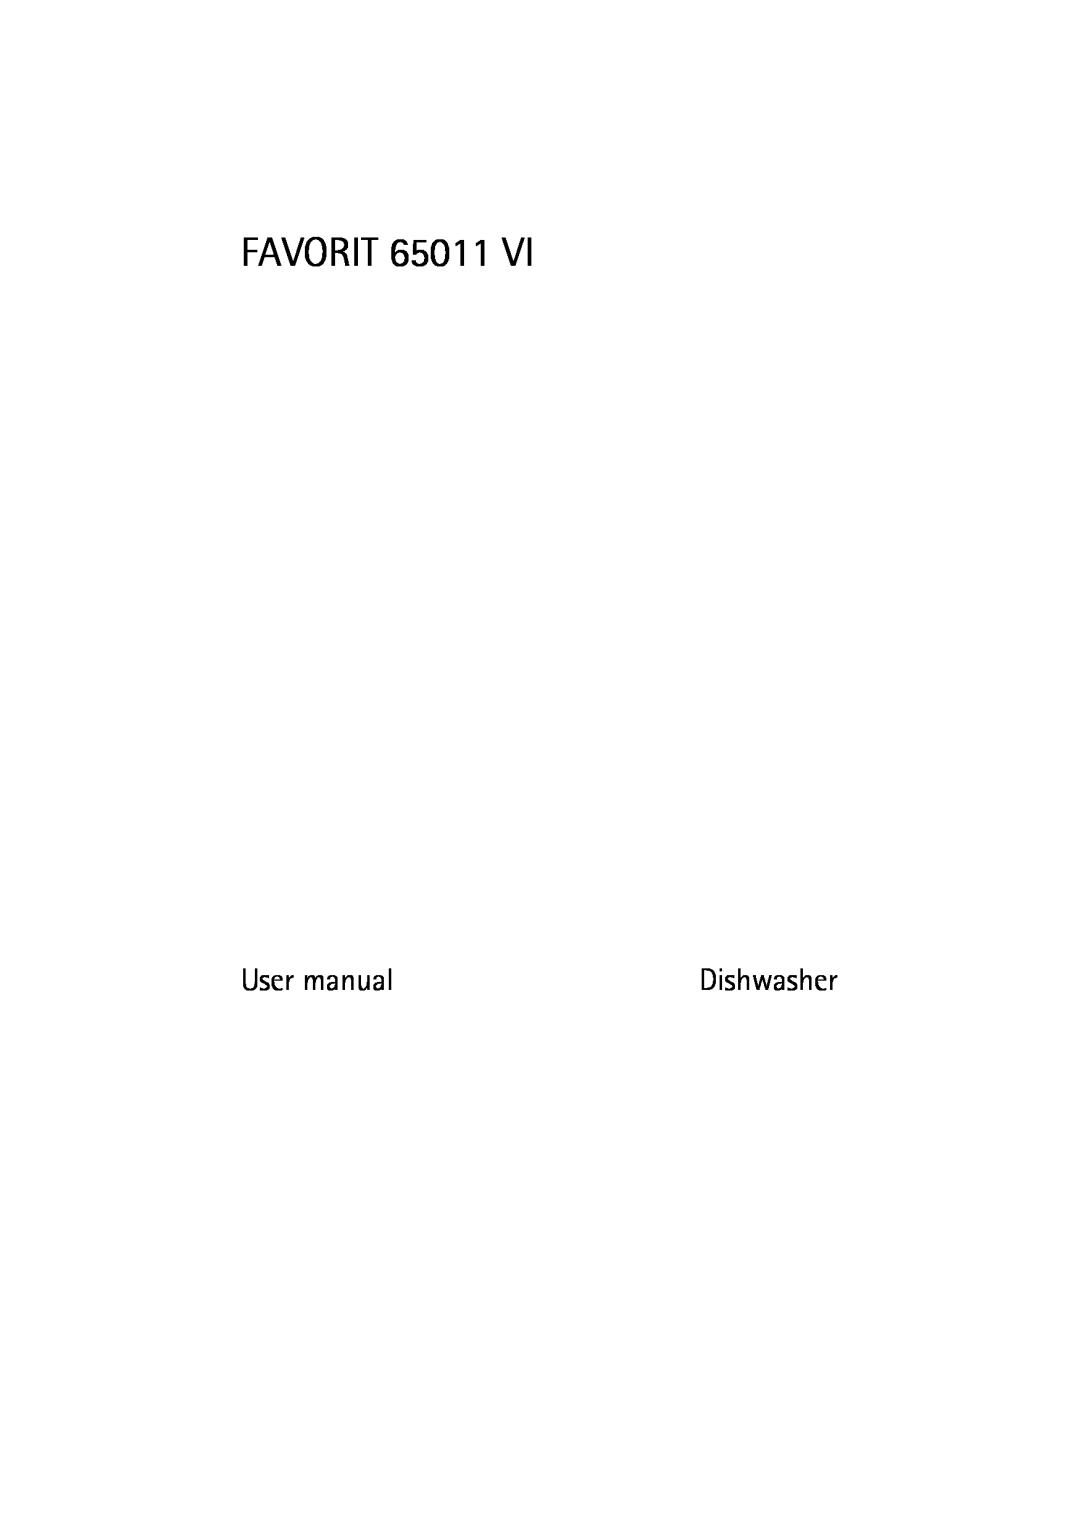 Electrolux 65011 VI user manual FAVORIT 65011, User manual, Dishwasher 